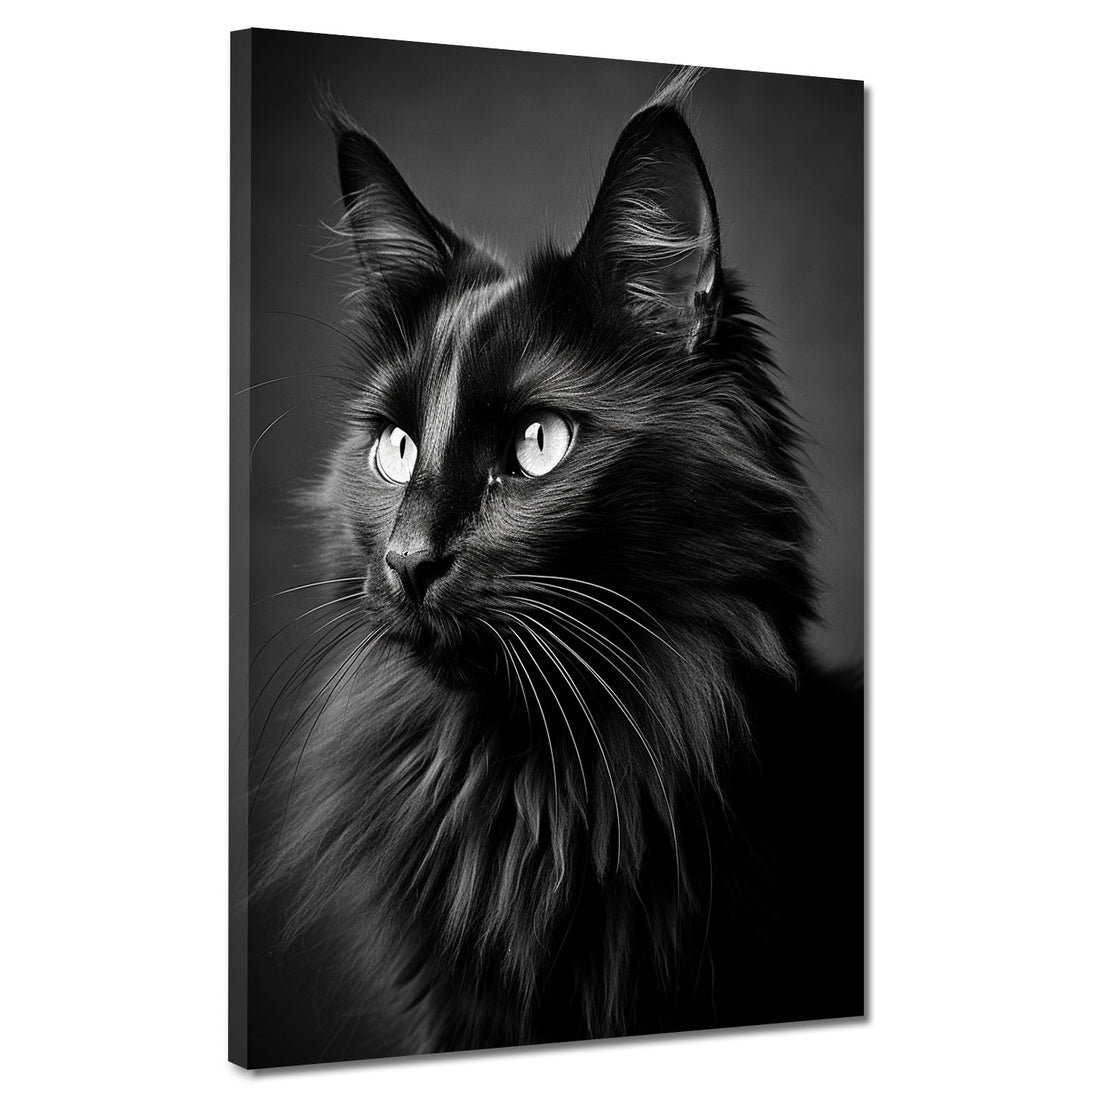 Wandbild wunderschön mit schwarze Katze